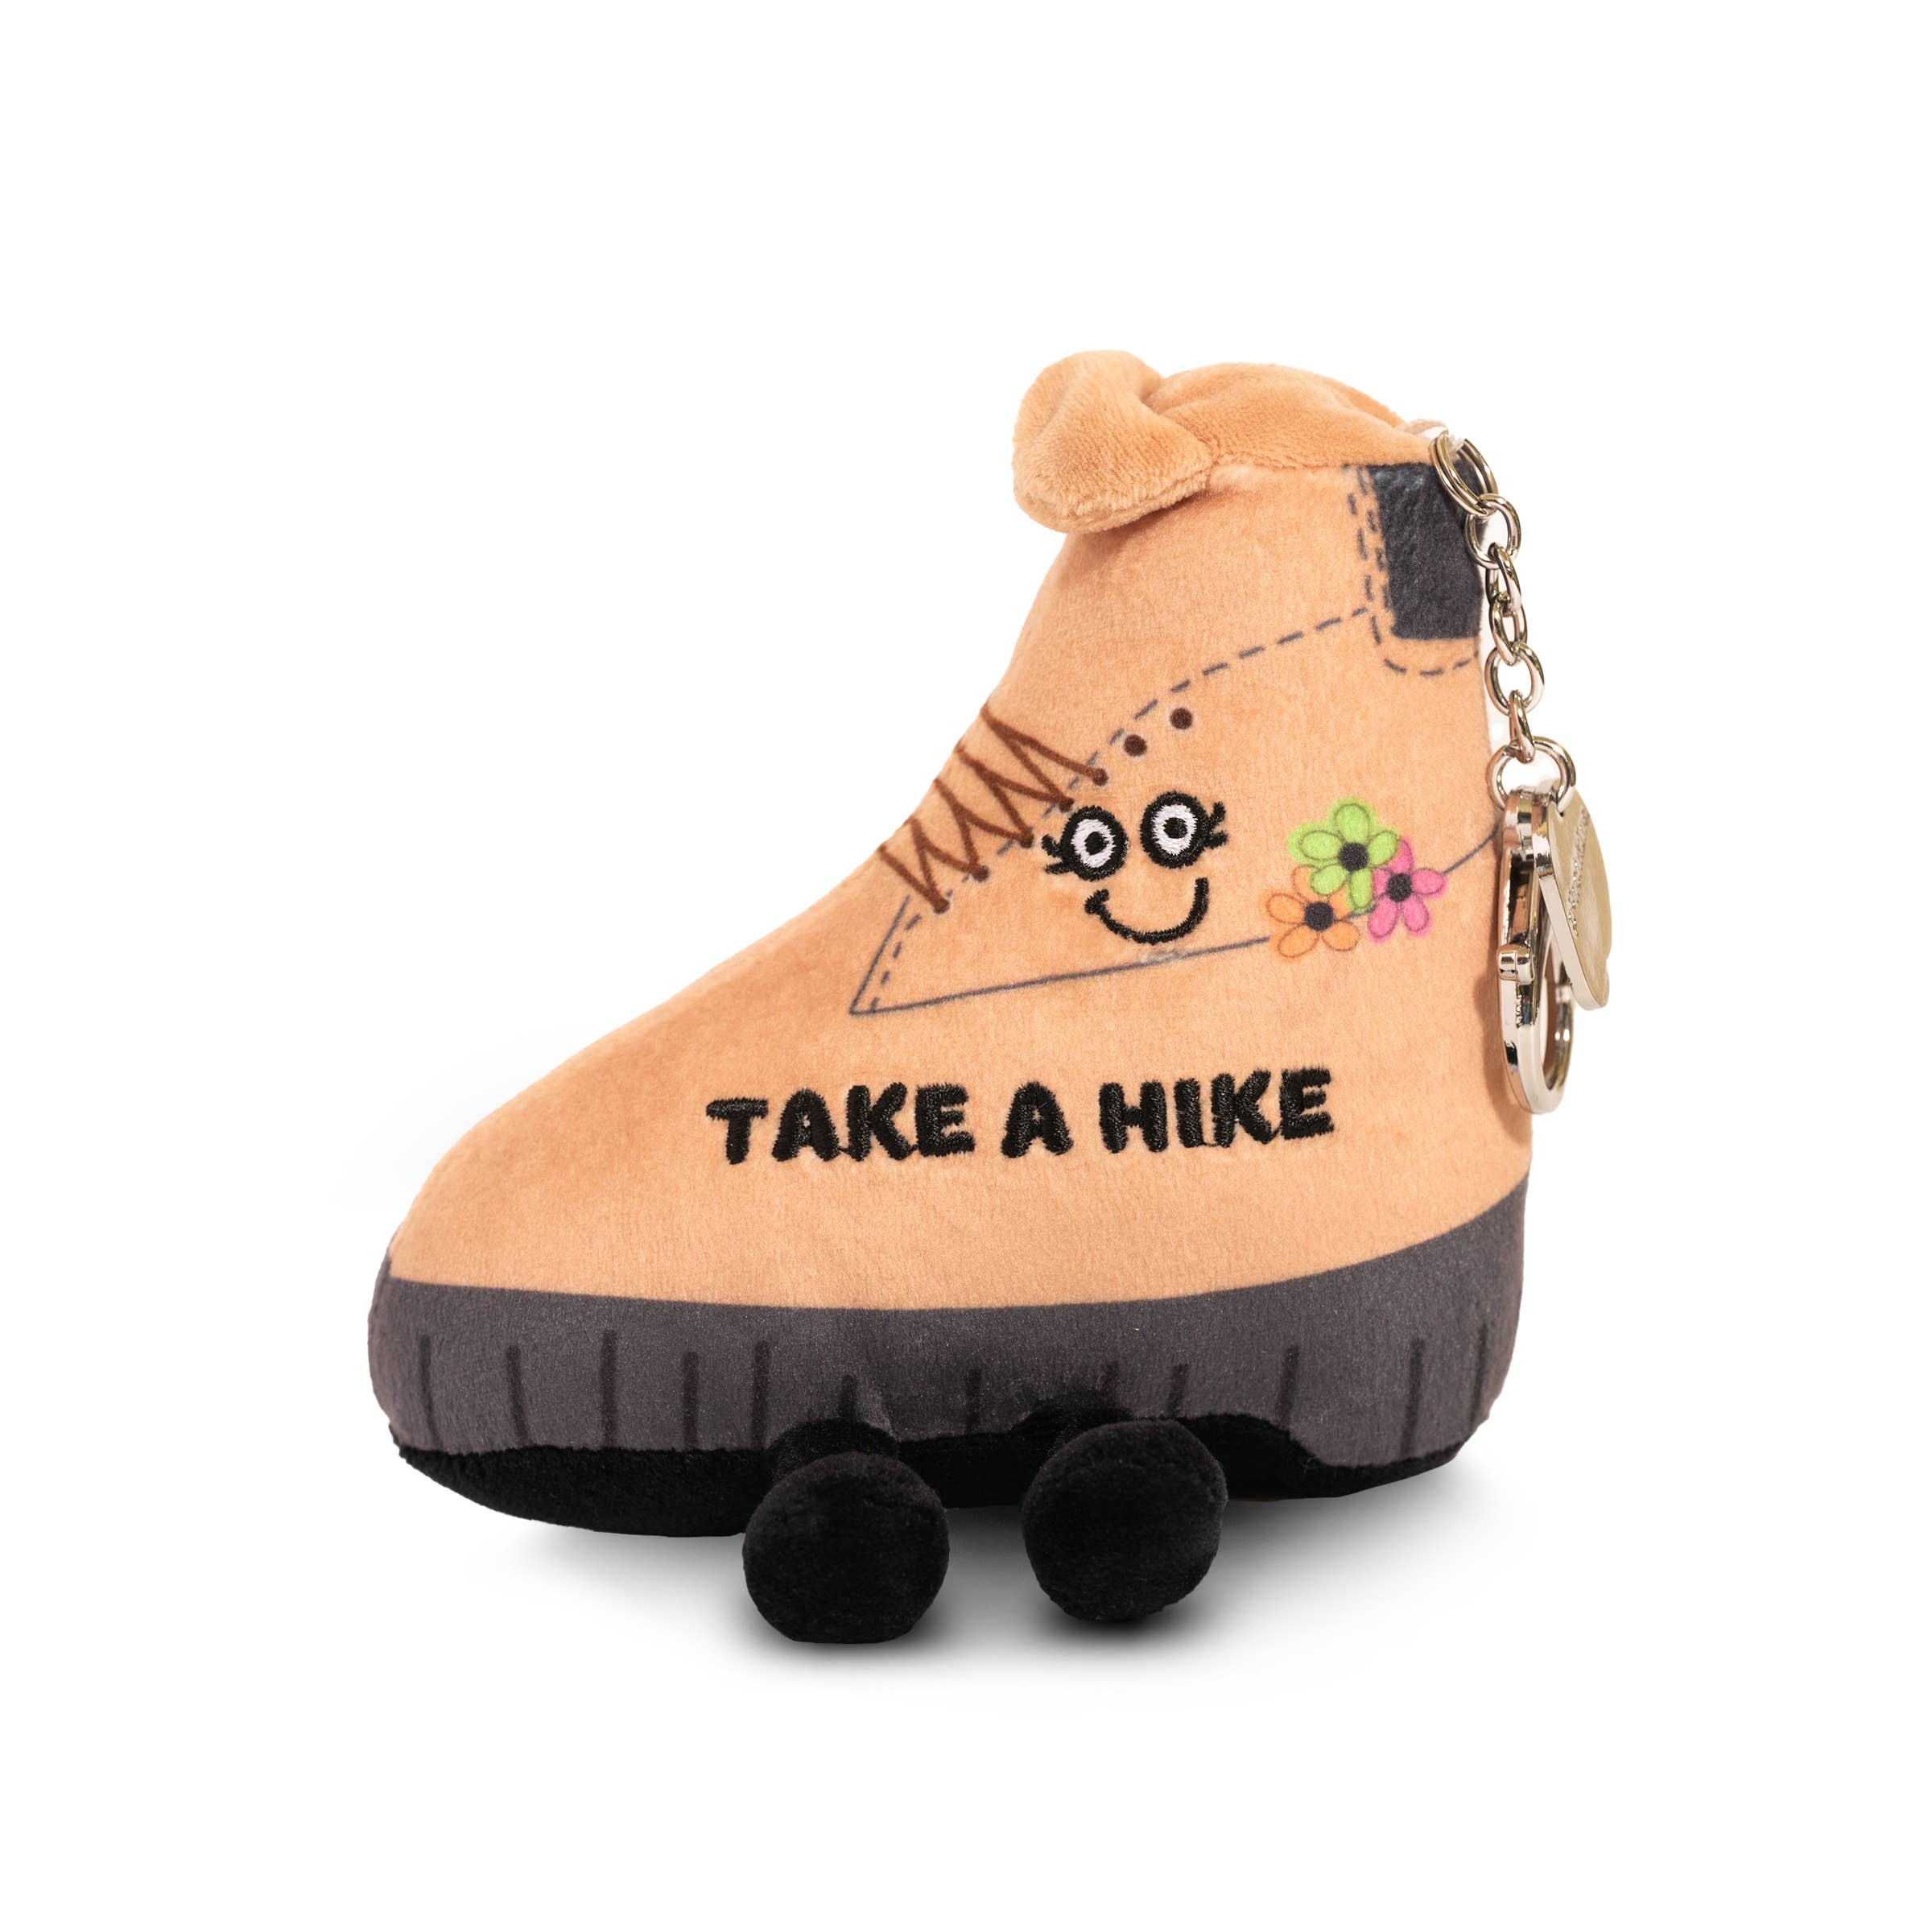 **SALE** Punchkins Book "Take a Hike" Plush Keychain